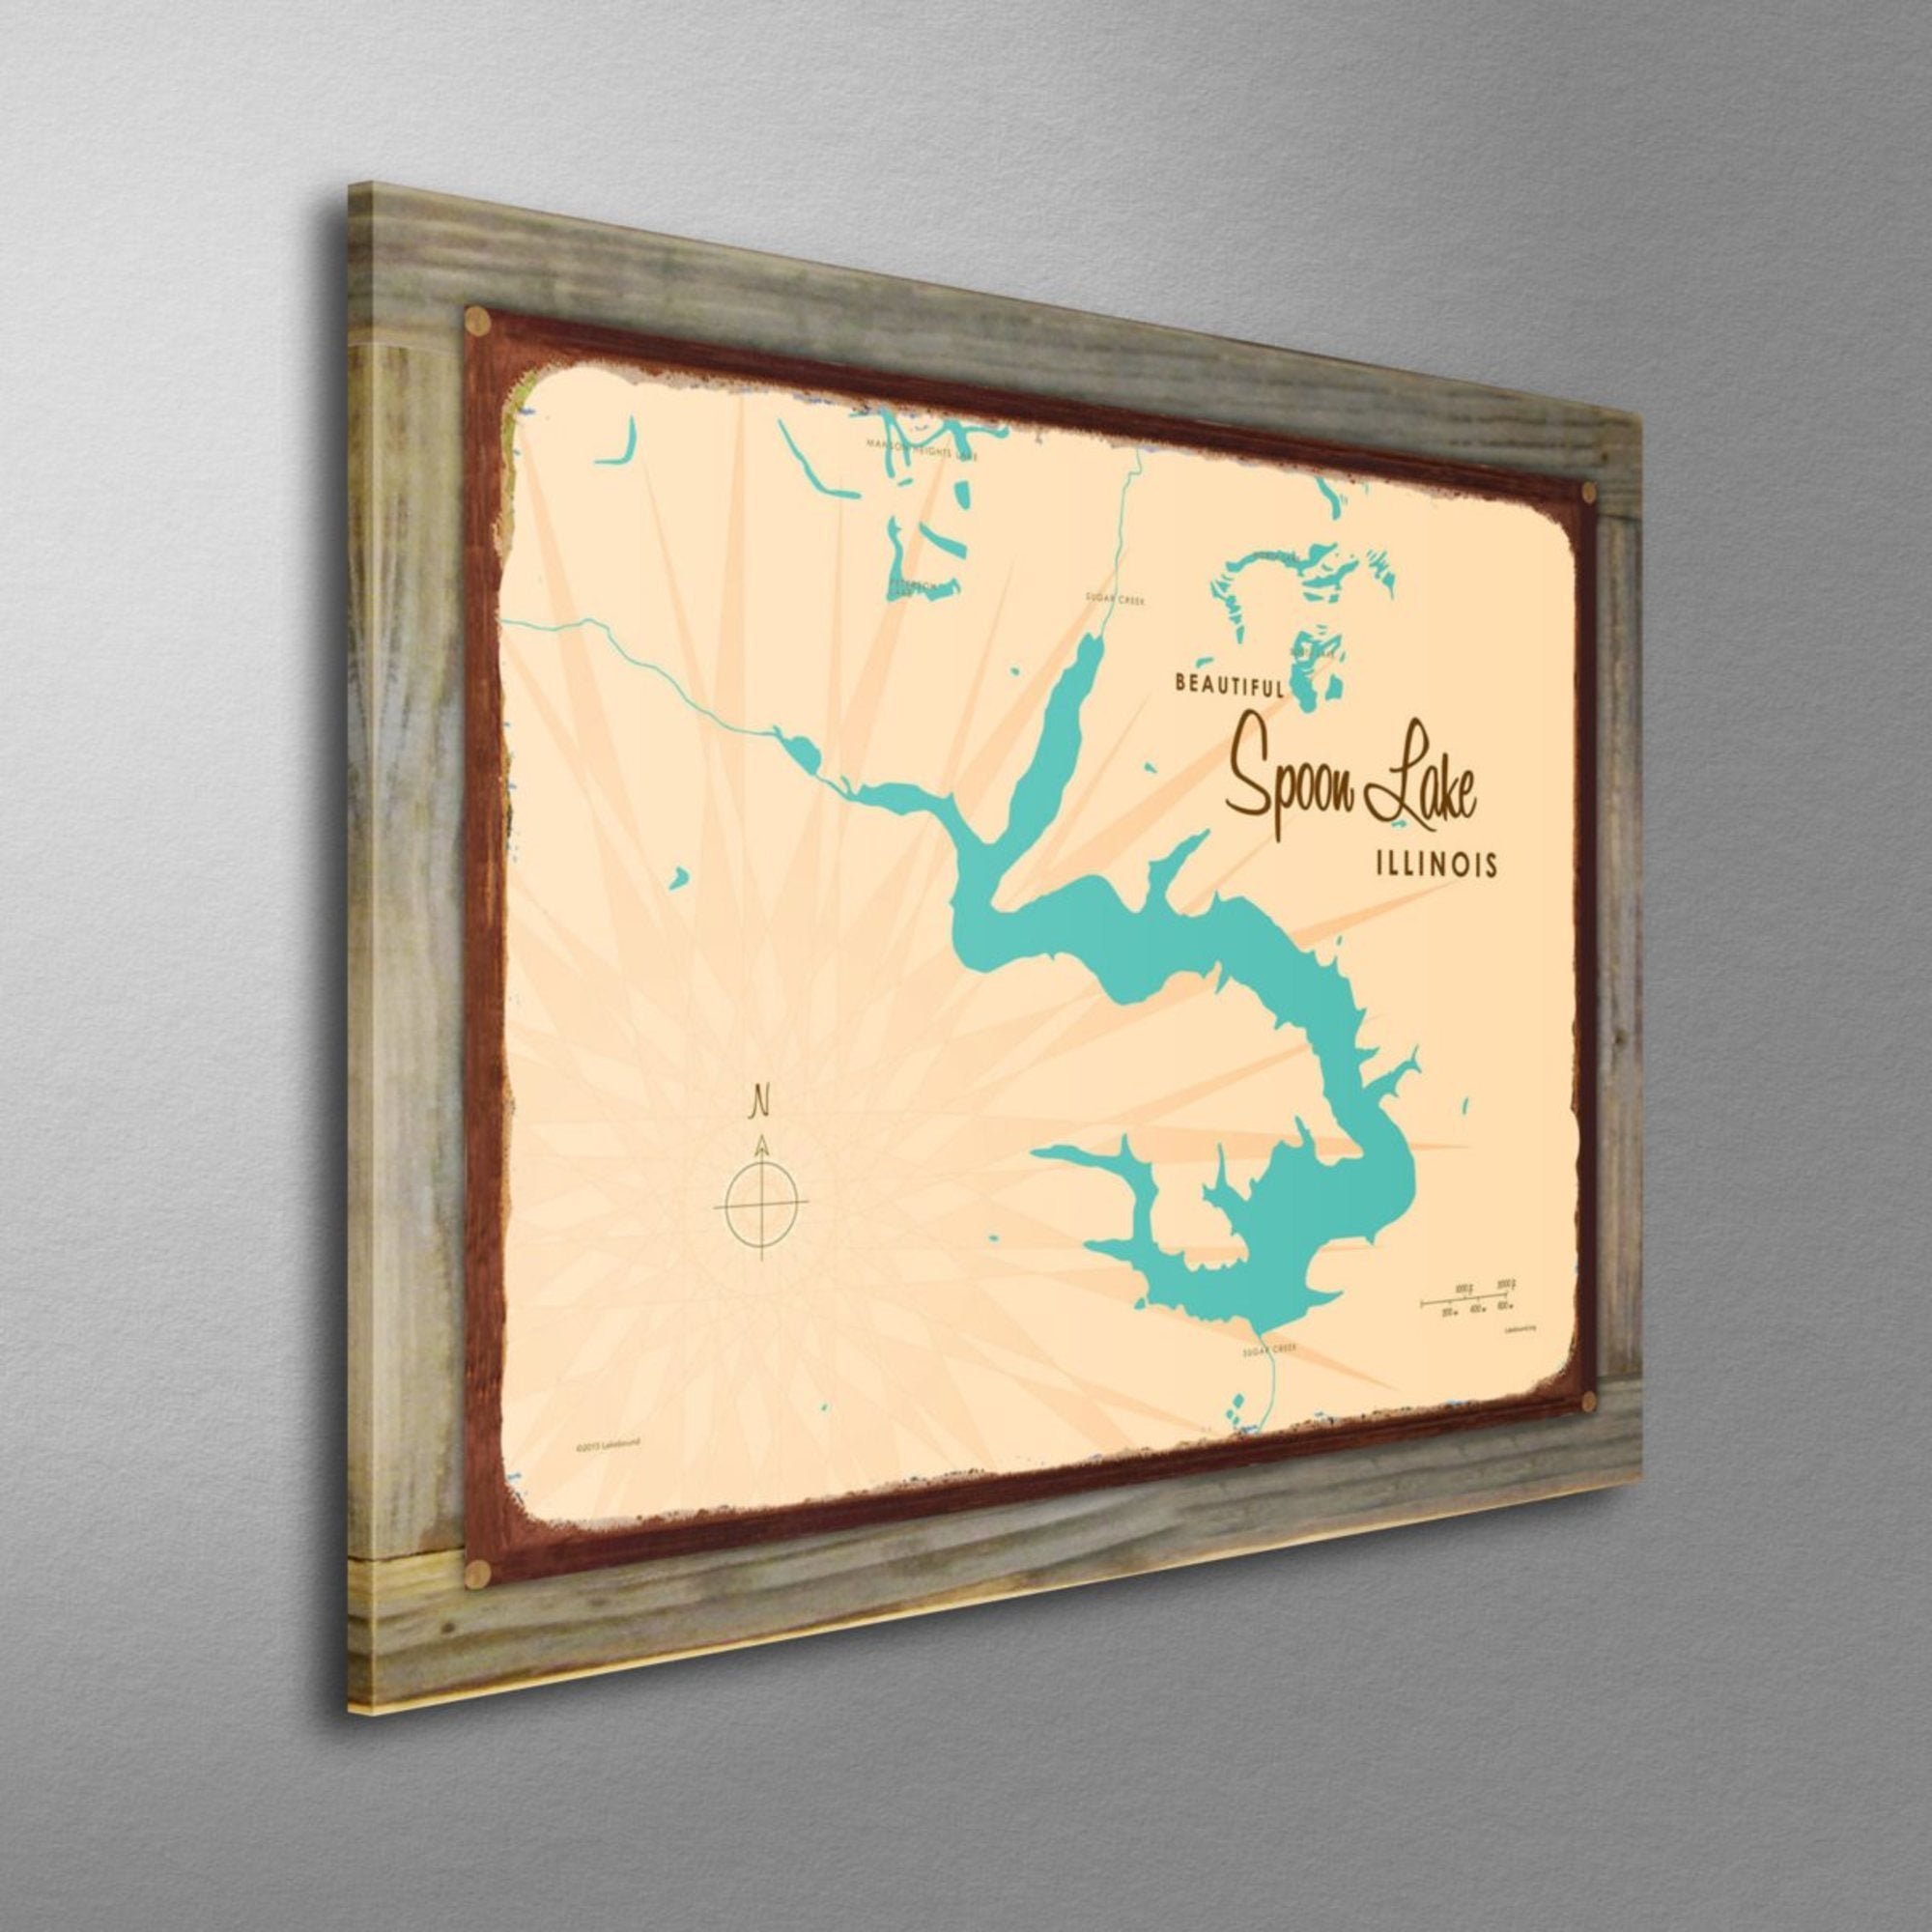 Spoon Lake Illinois, Wood-Mounted Rustic Metal Sign Map Art